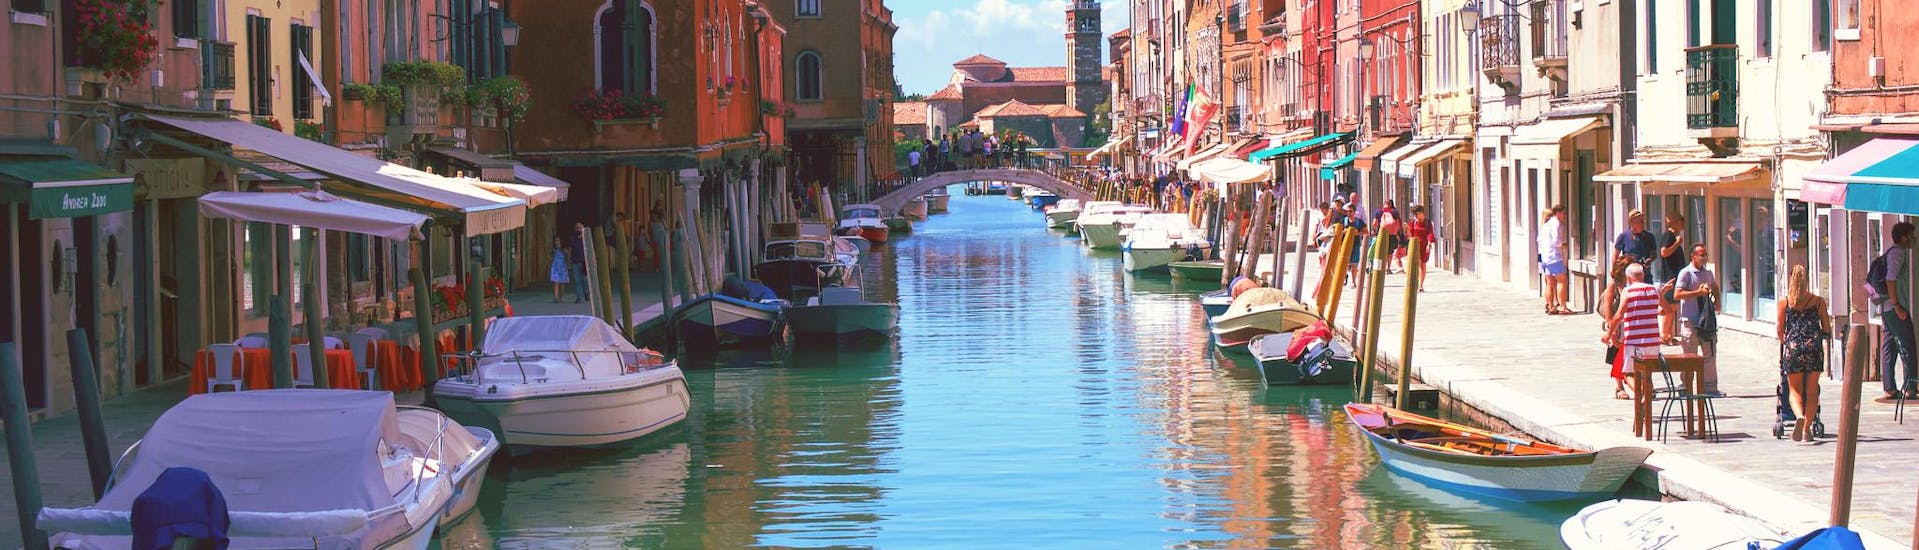 Barcos en el canal de Murano durante un paseo en barco a Murano.